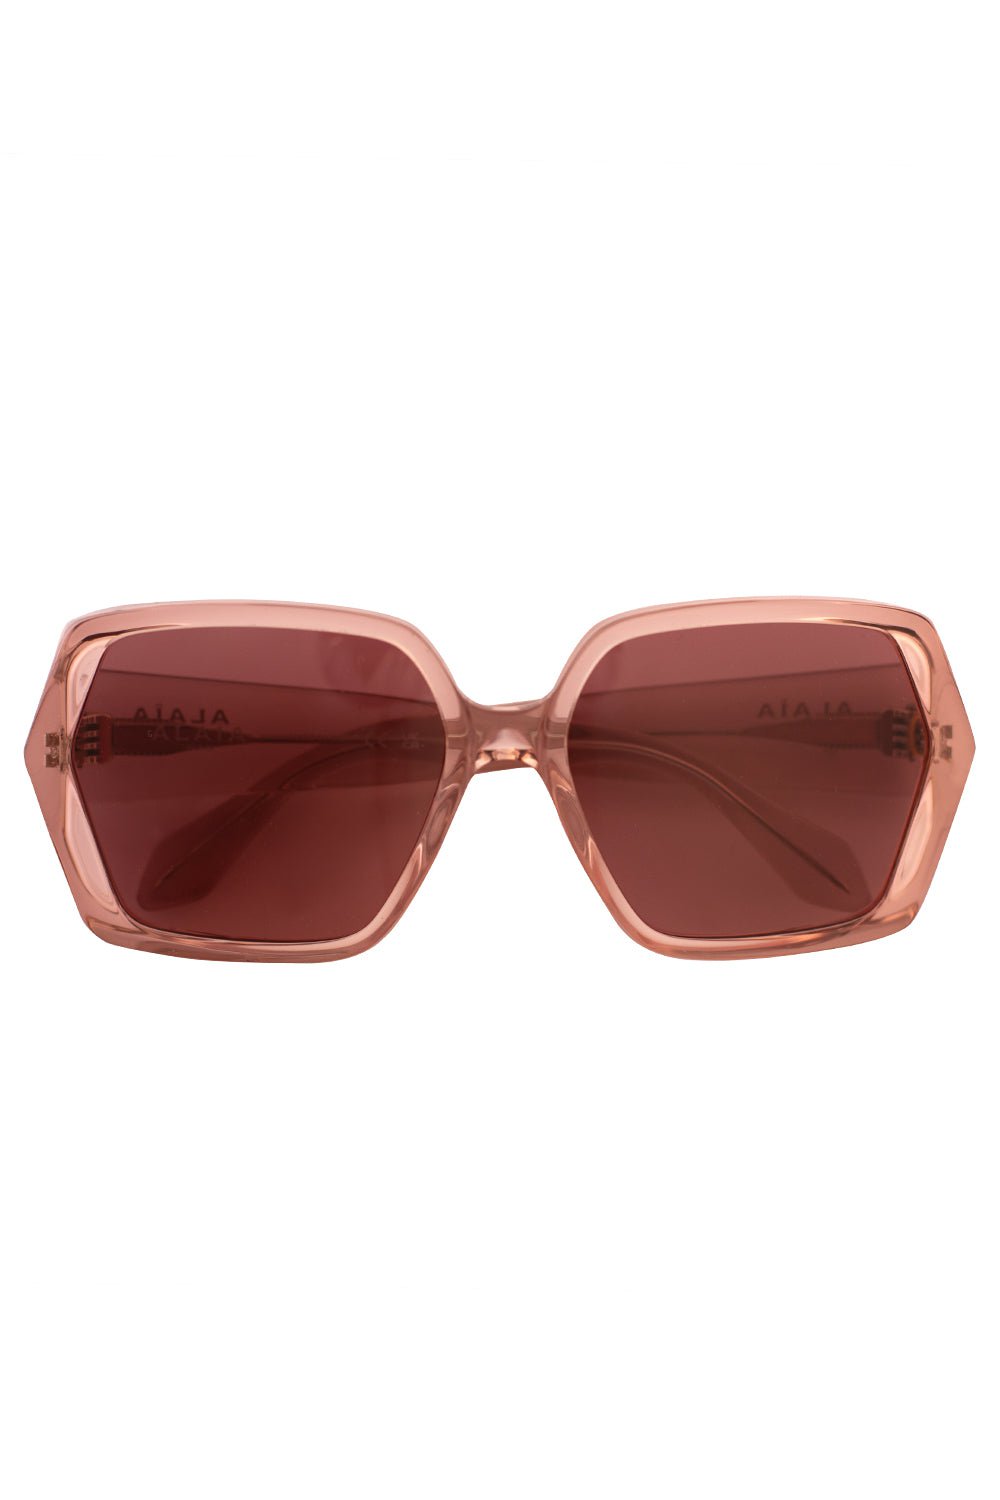 ALAÏA-Azzedine Logo Sunglasses-PINK/BORDEAUX